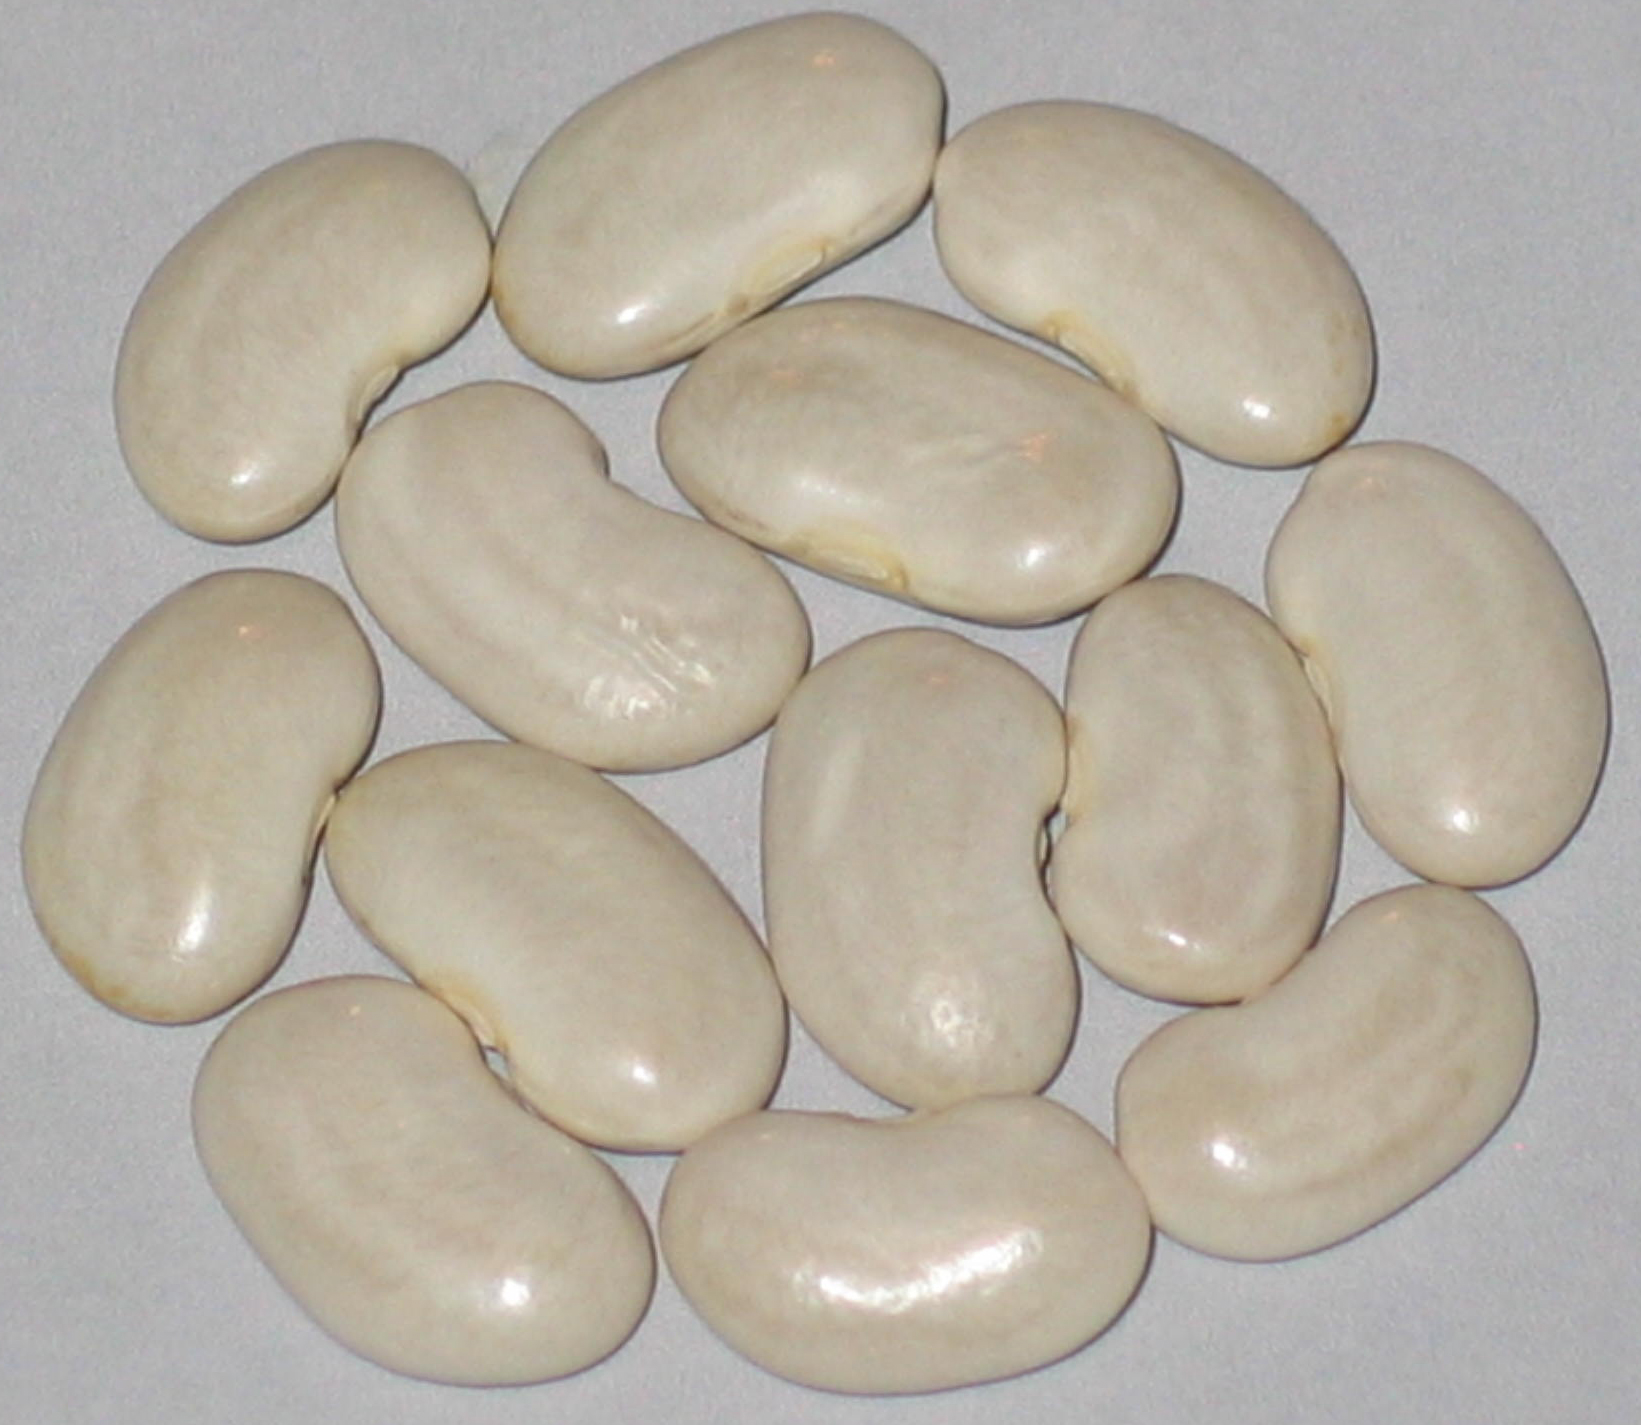 image of Tarbais beans